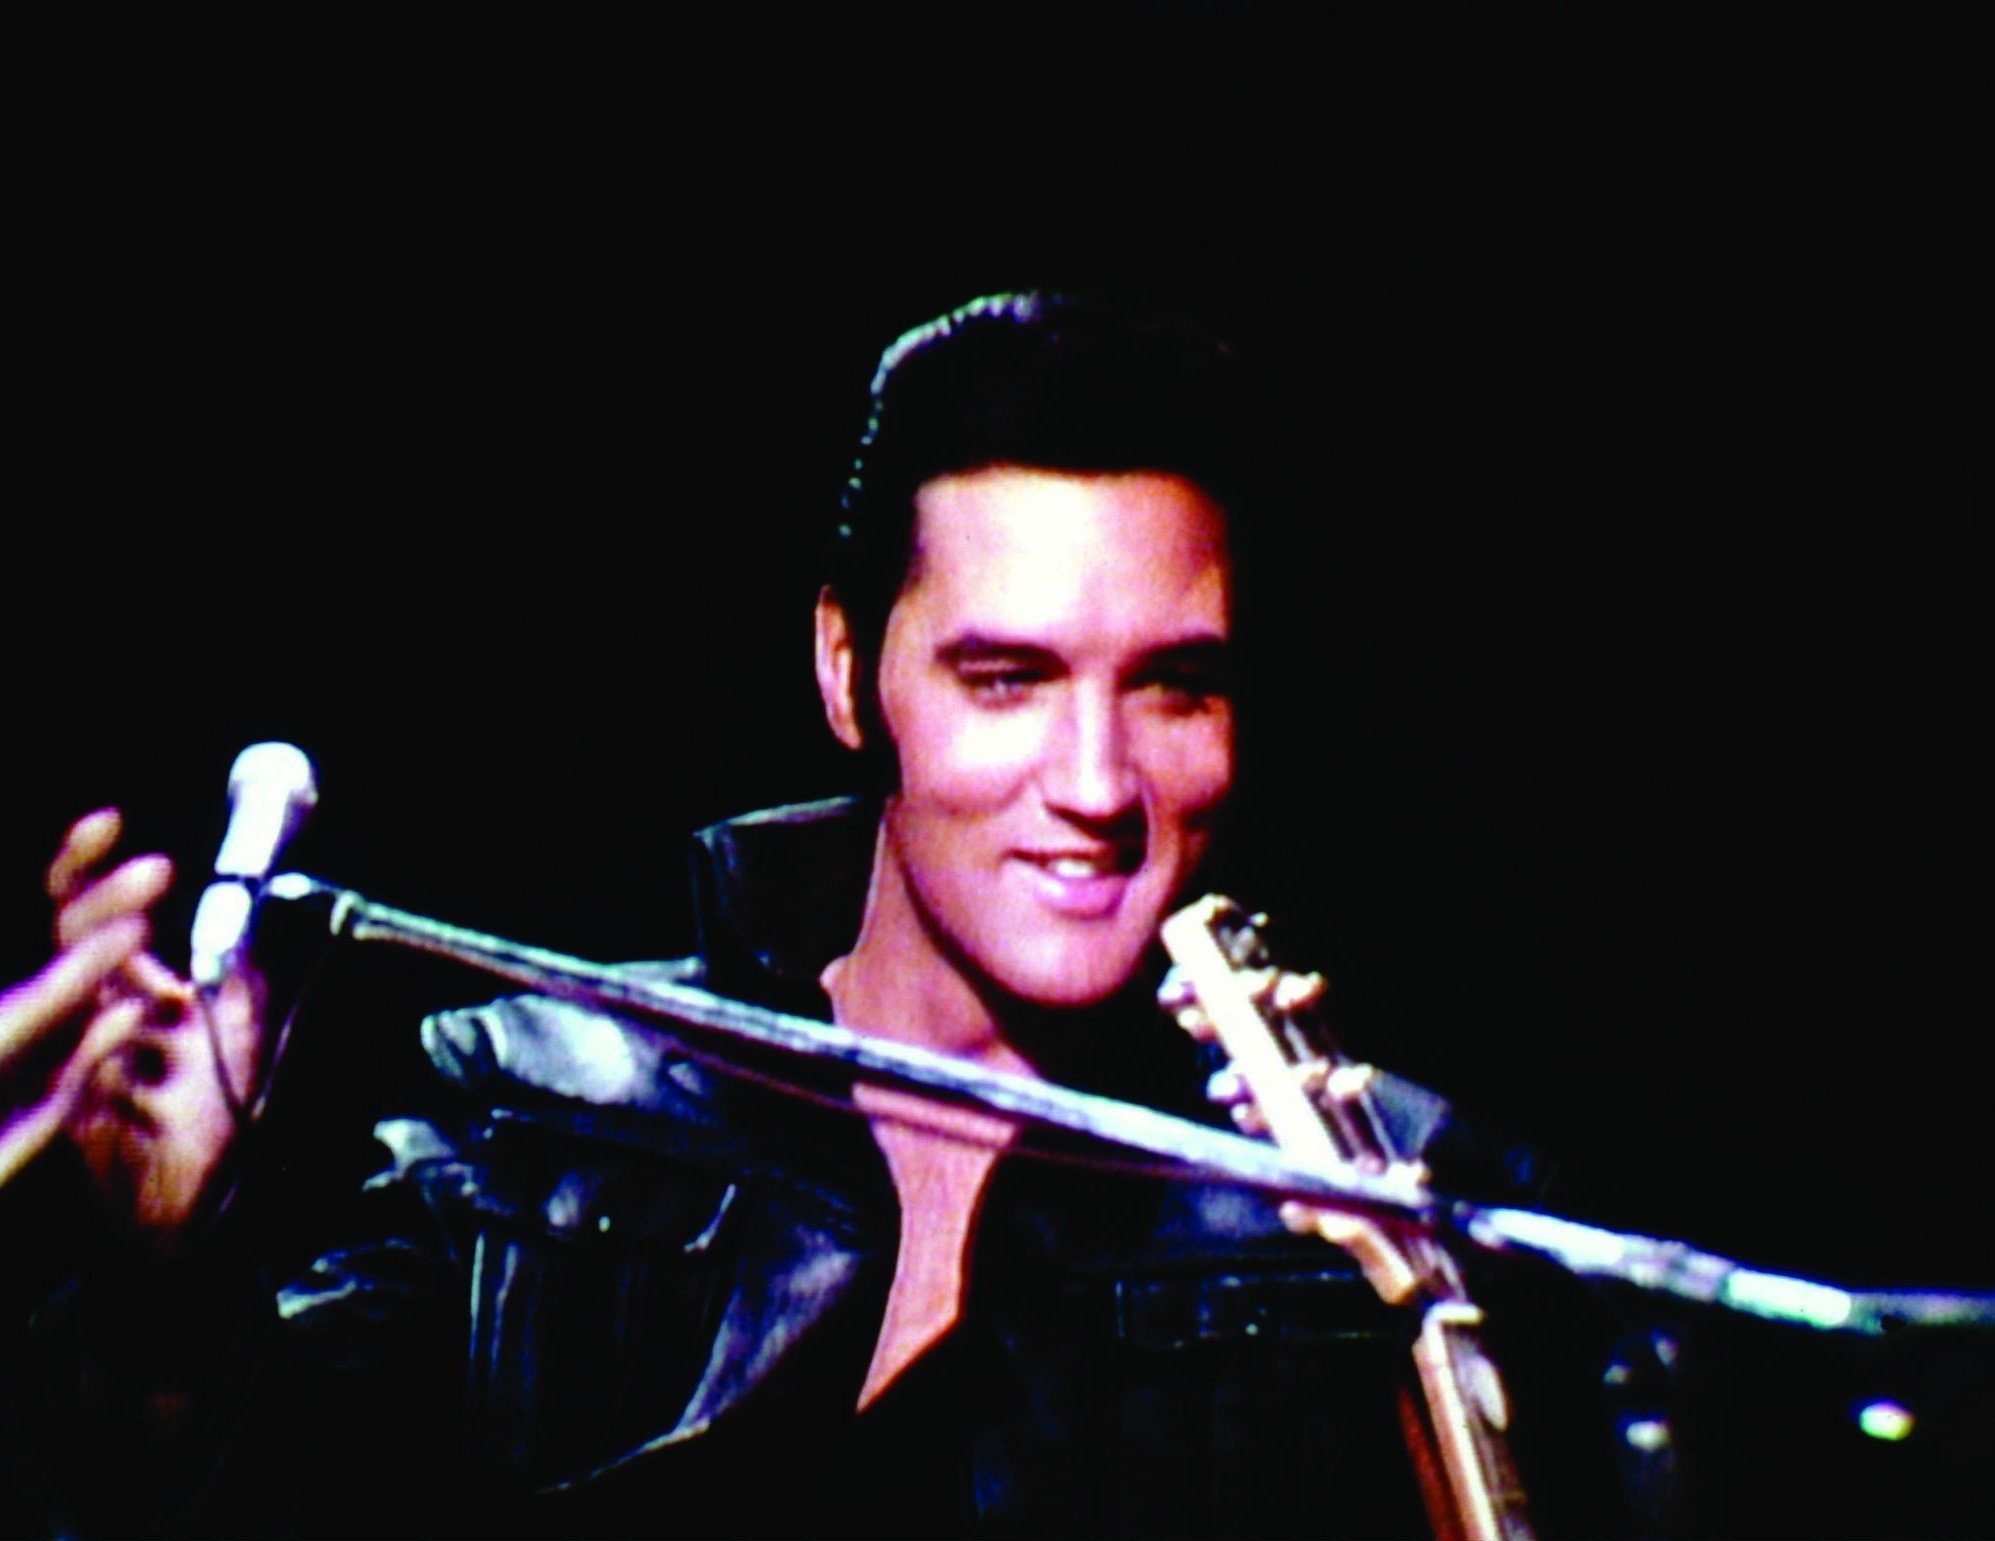 1995x1541 Elvis Presley Wallpapers Widescreen Images Photos Pictures